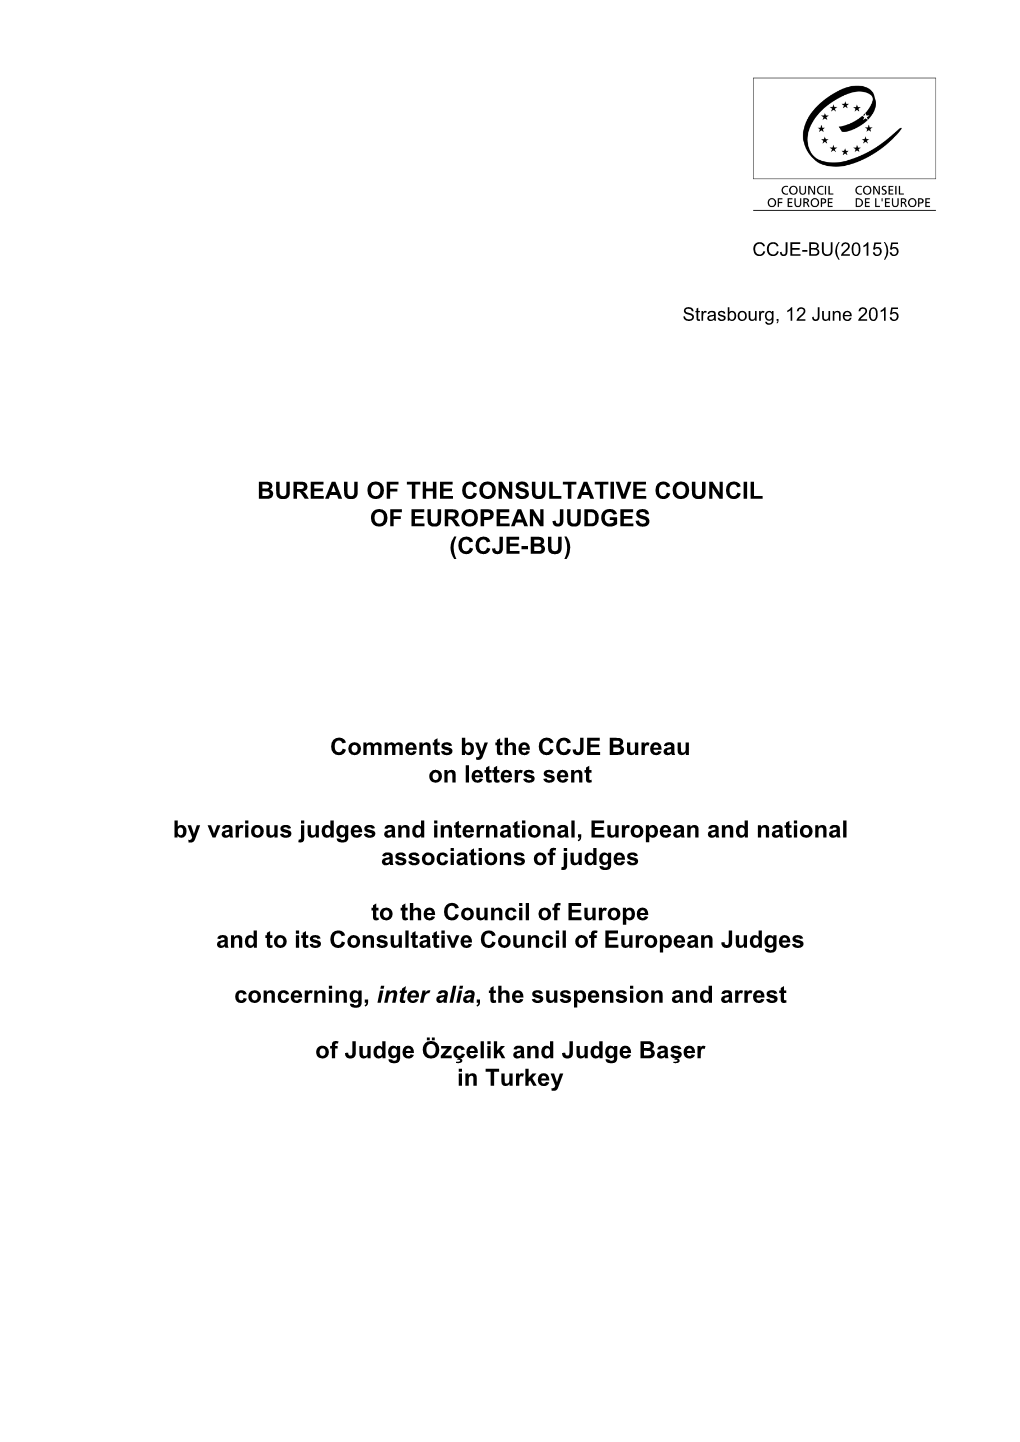 Bureau of the Consultative Council of European Judges (Ccje-Bu)